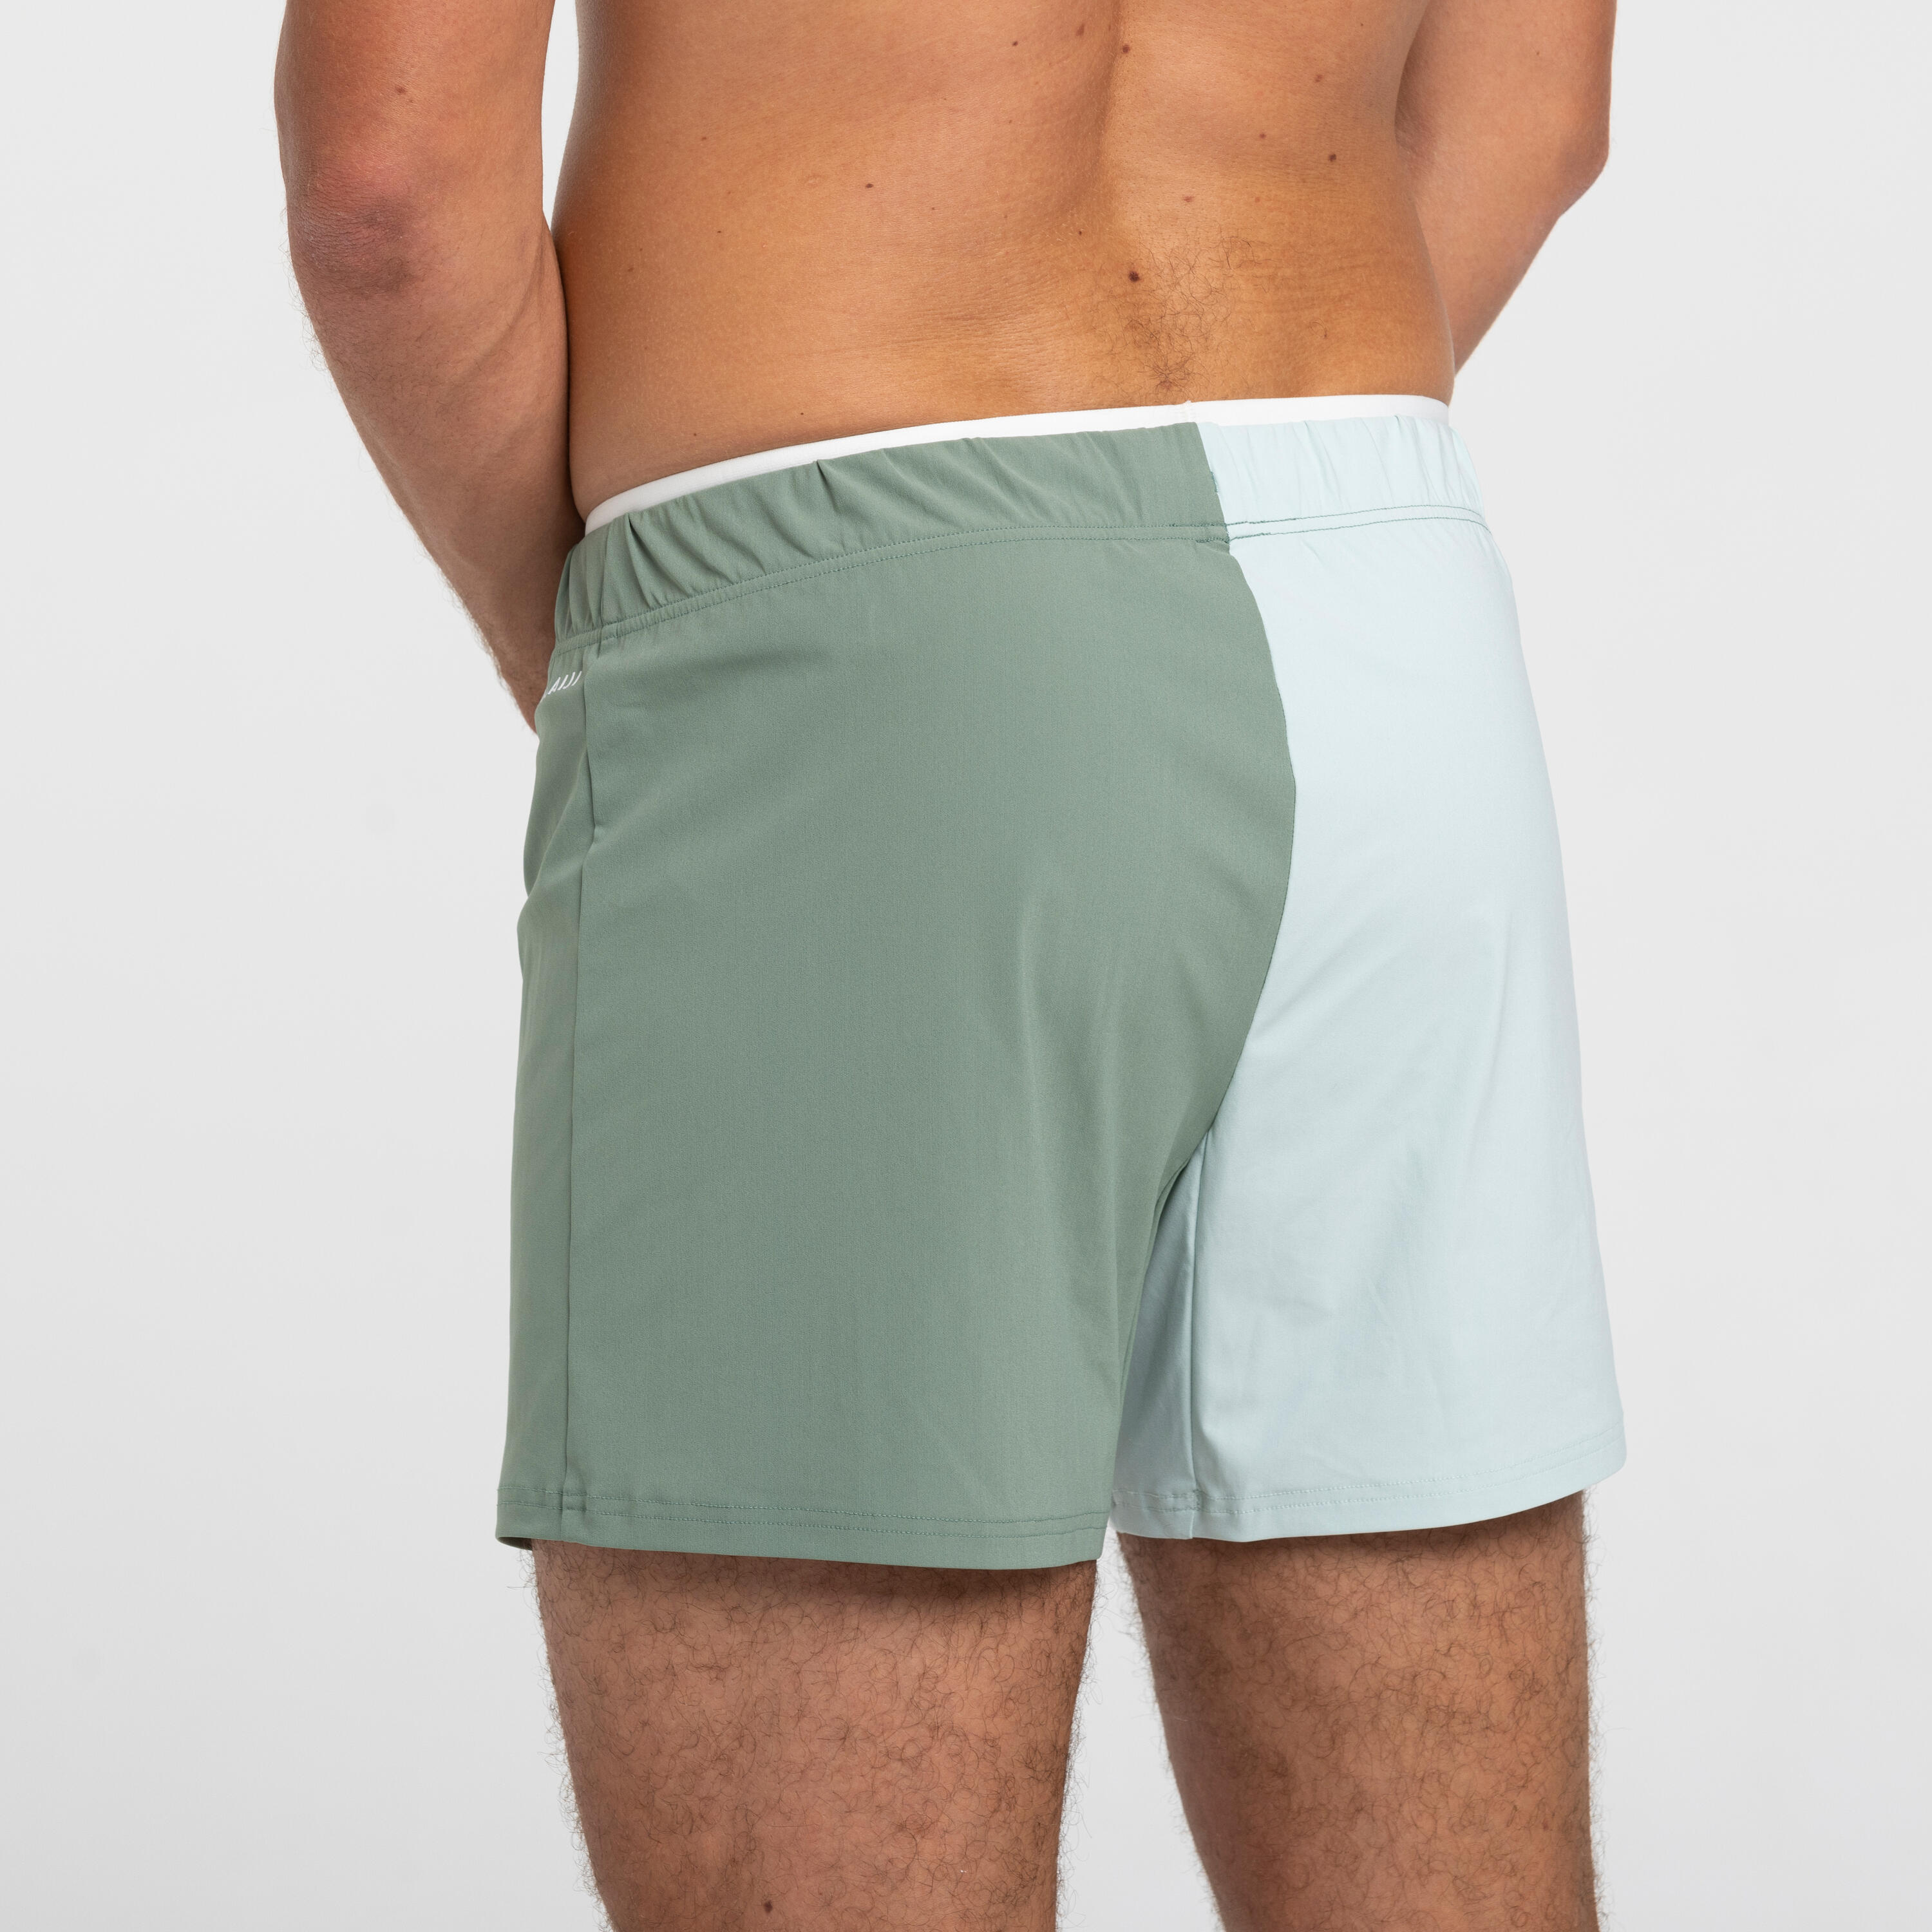 Men's swimming shorts 100 Short - Khaki green 4/6